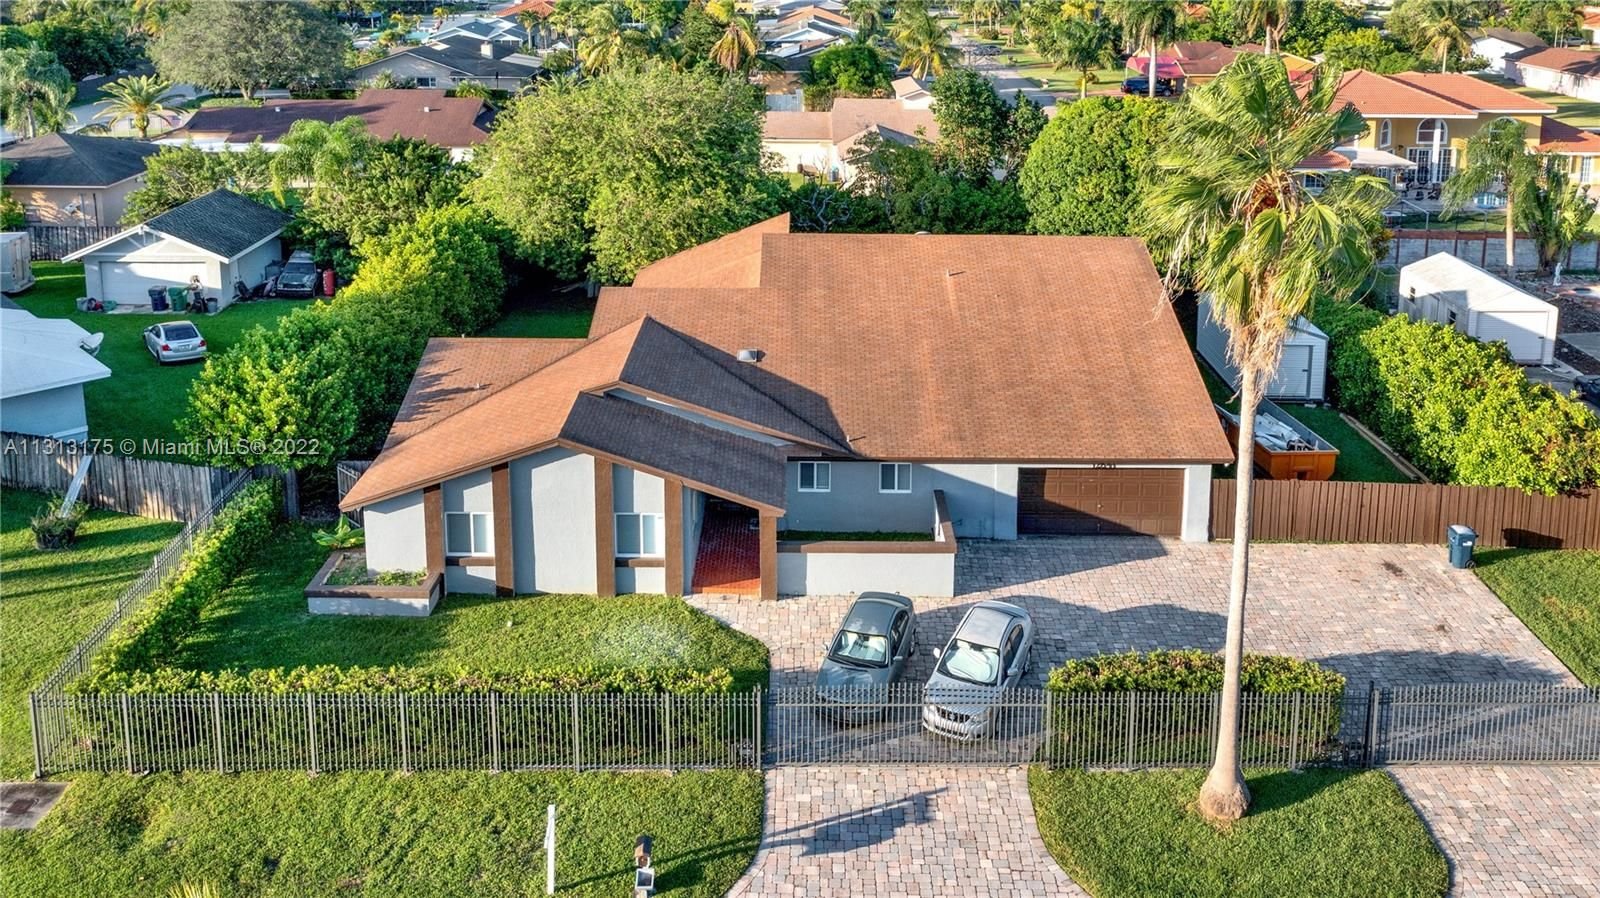 Real estate property located at 12841 187th Ter, Miami-Dade County, Miami, FL